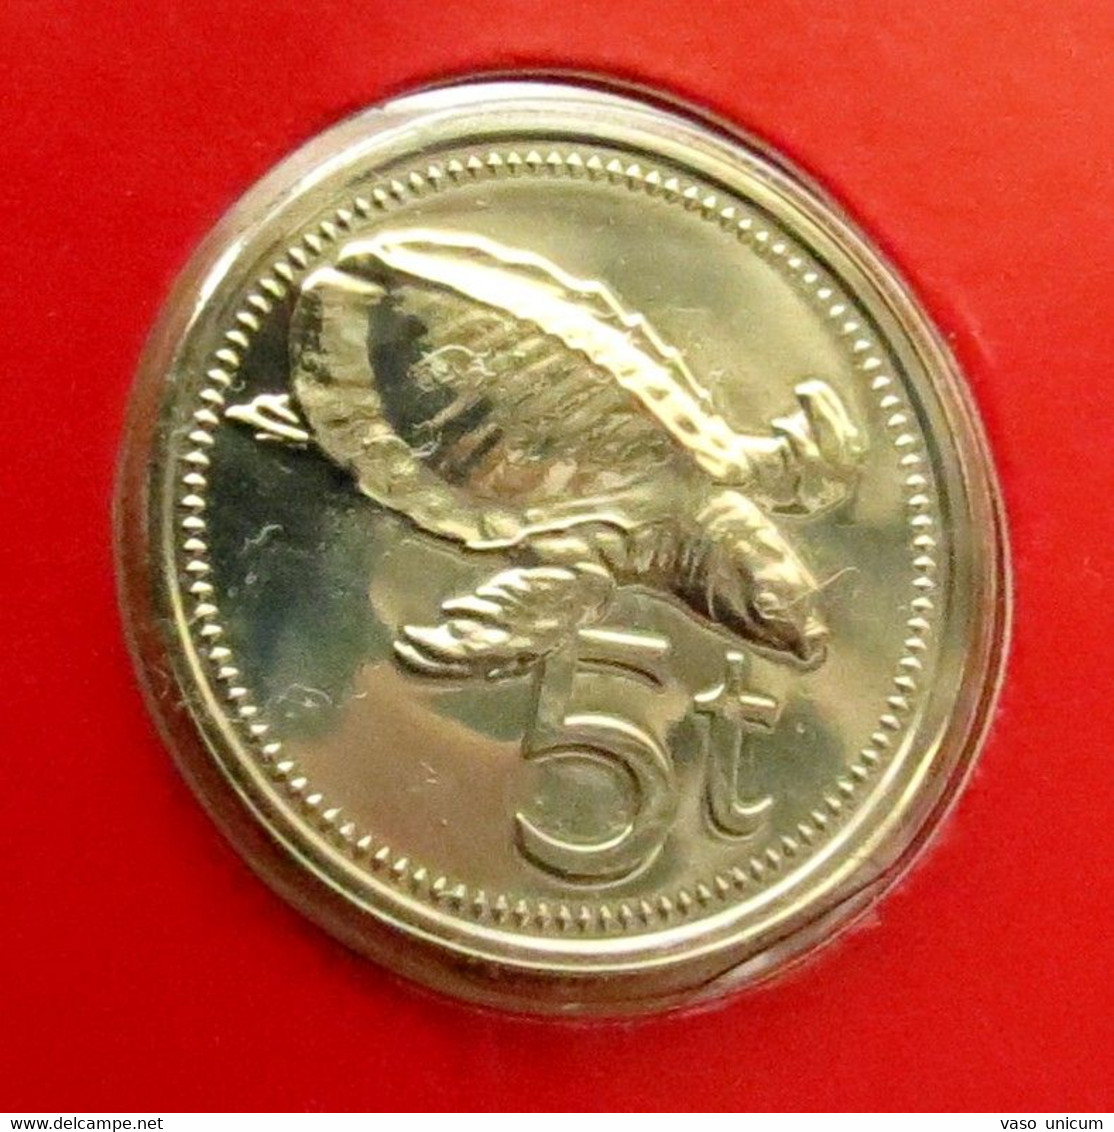 Papua New Guinea 5 Toea 1977 UNC - Minted 603 Coins Only - Papúa Nueva Guinea